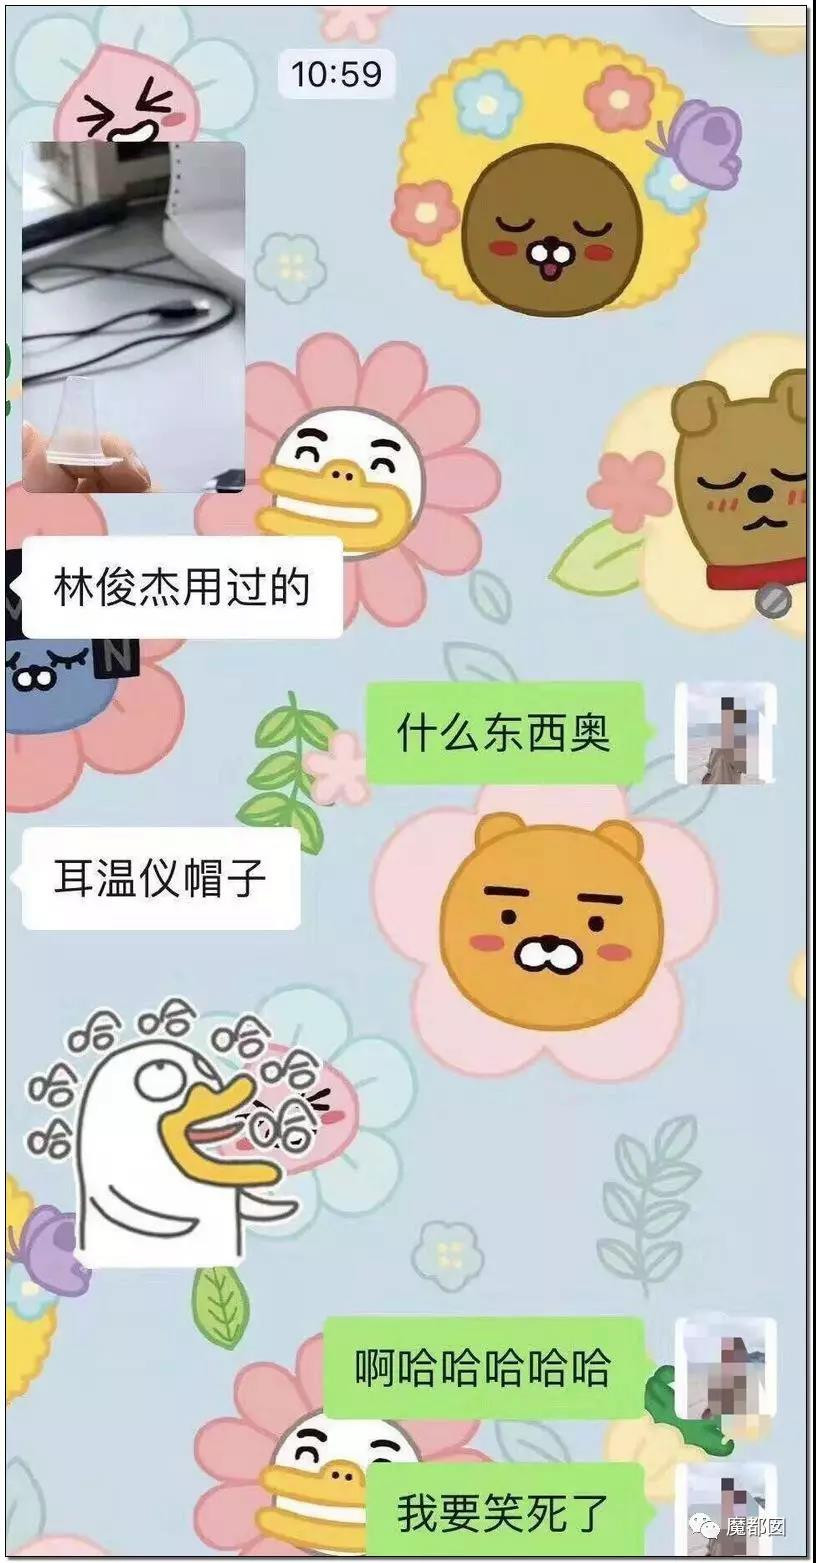 WeChat Image 20191030132618